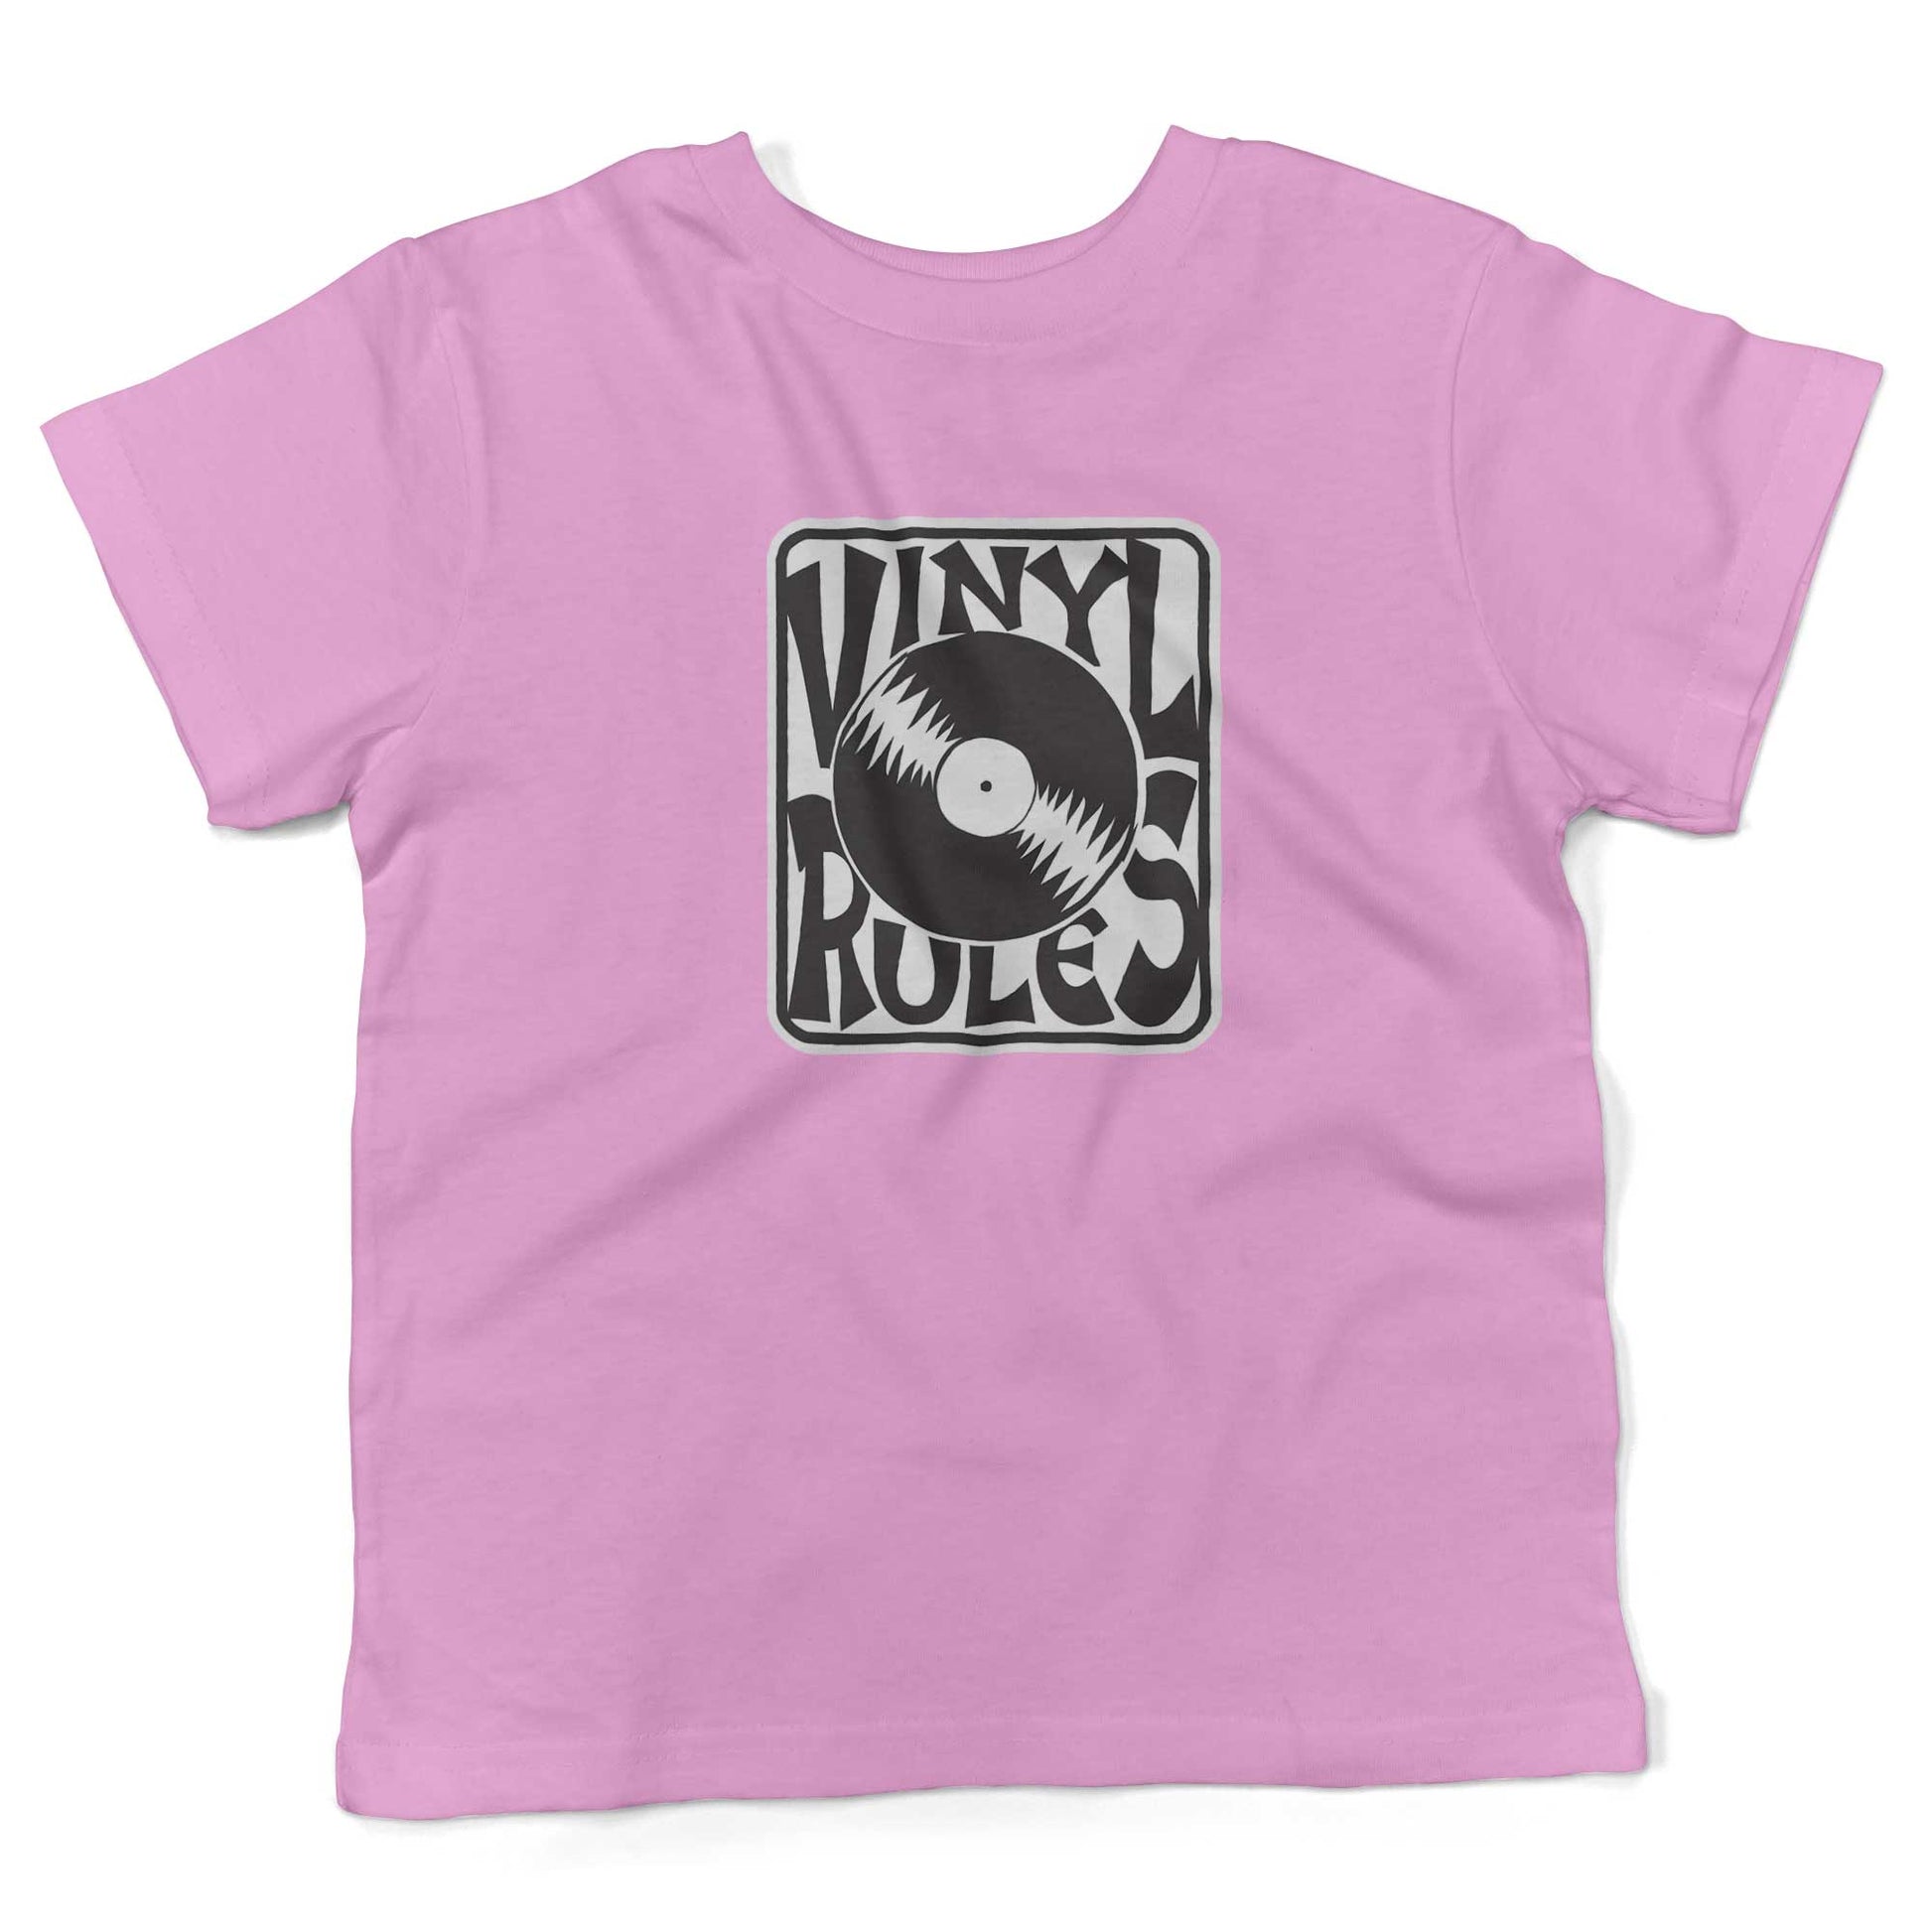 Vinyl Rules Toddler Shirt-Organic Pink-2T